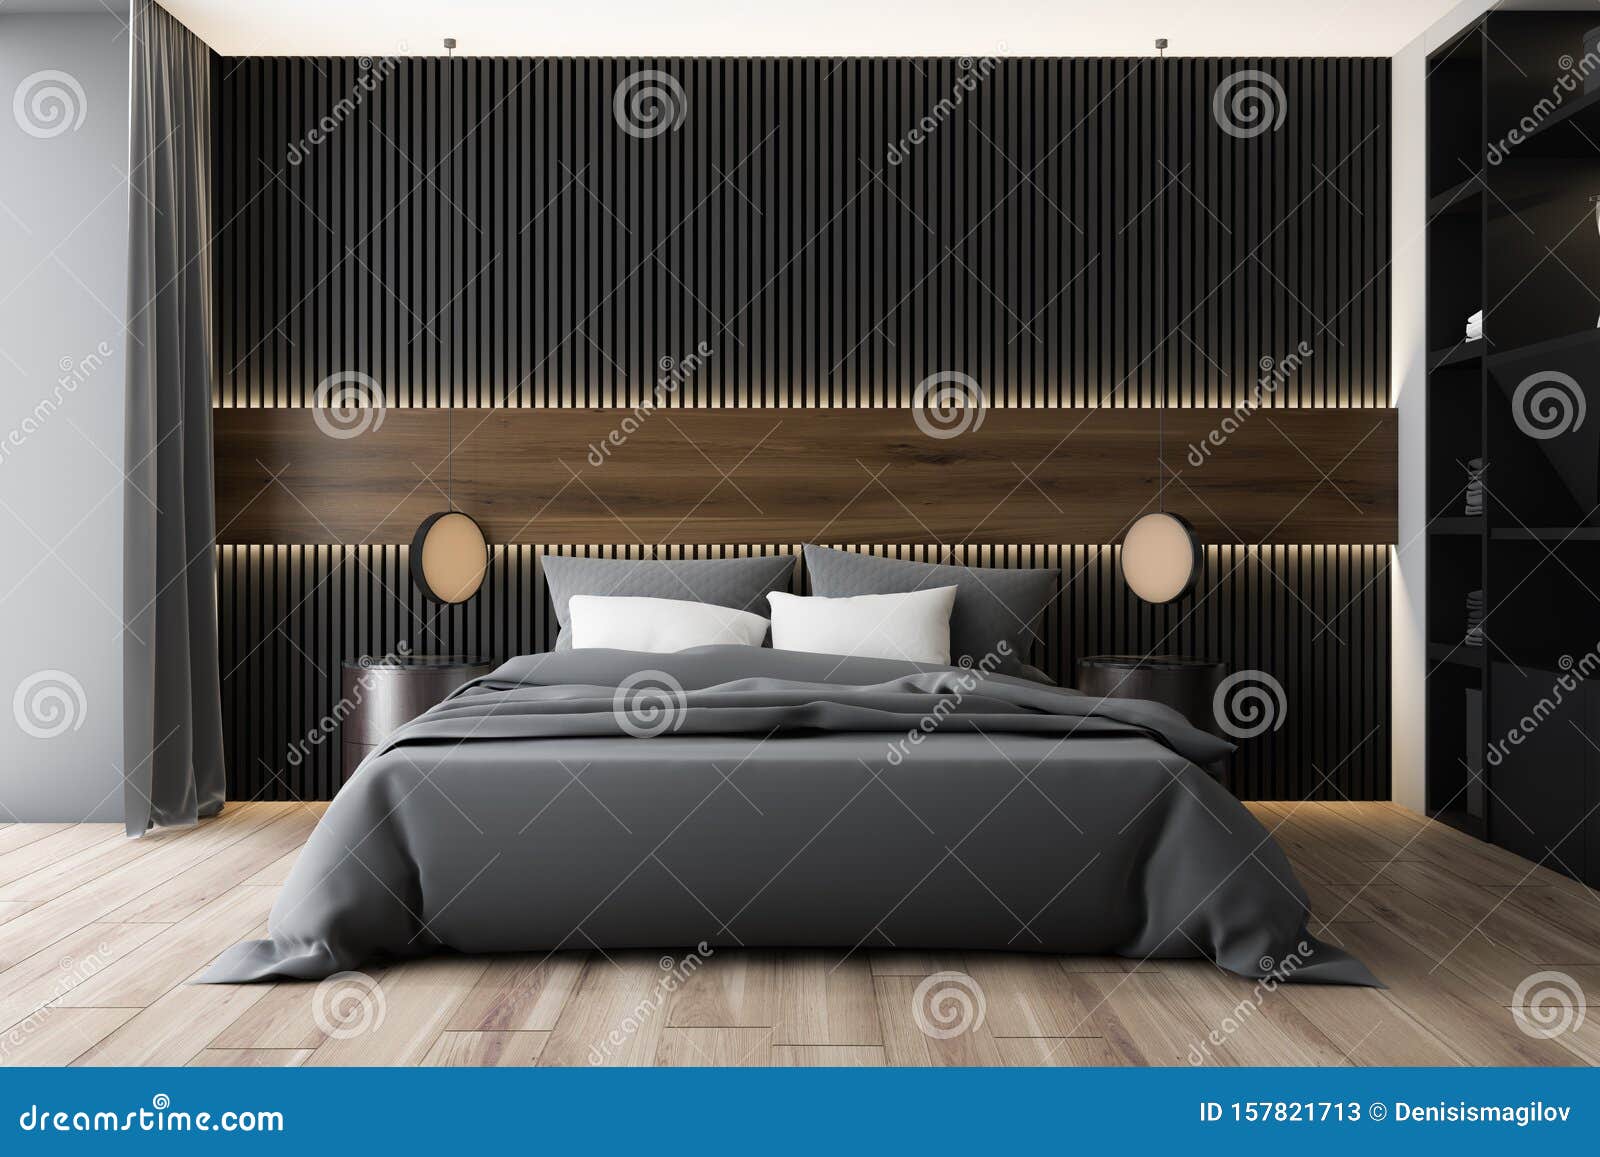 Dark Wood And Gray Bedroom Interior Stock Illustration